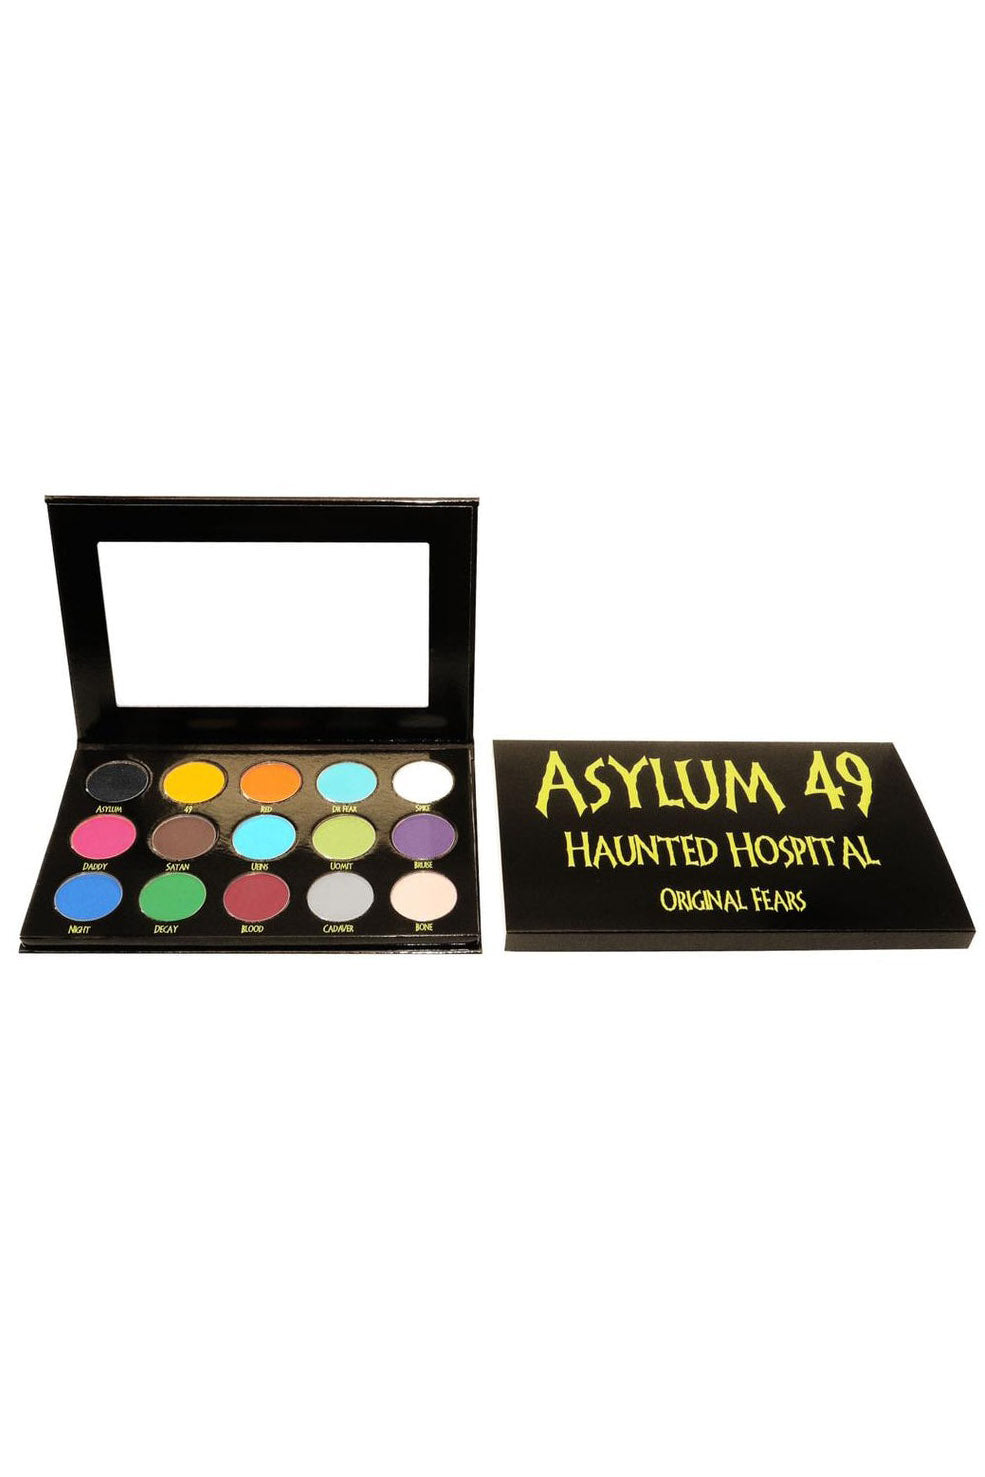 Asylum 49 Eyeshadow Palette [ORIGINAL FEARS]